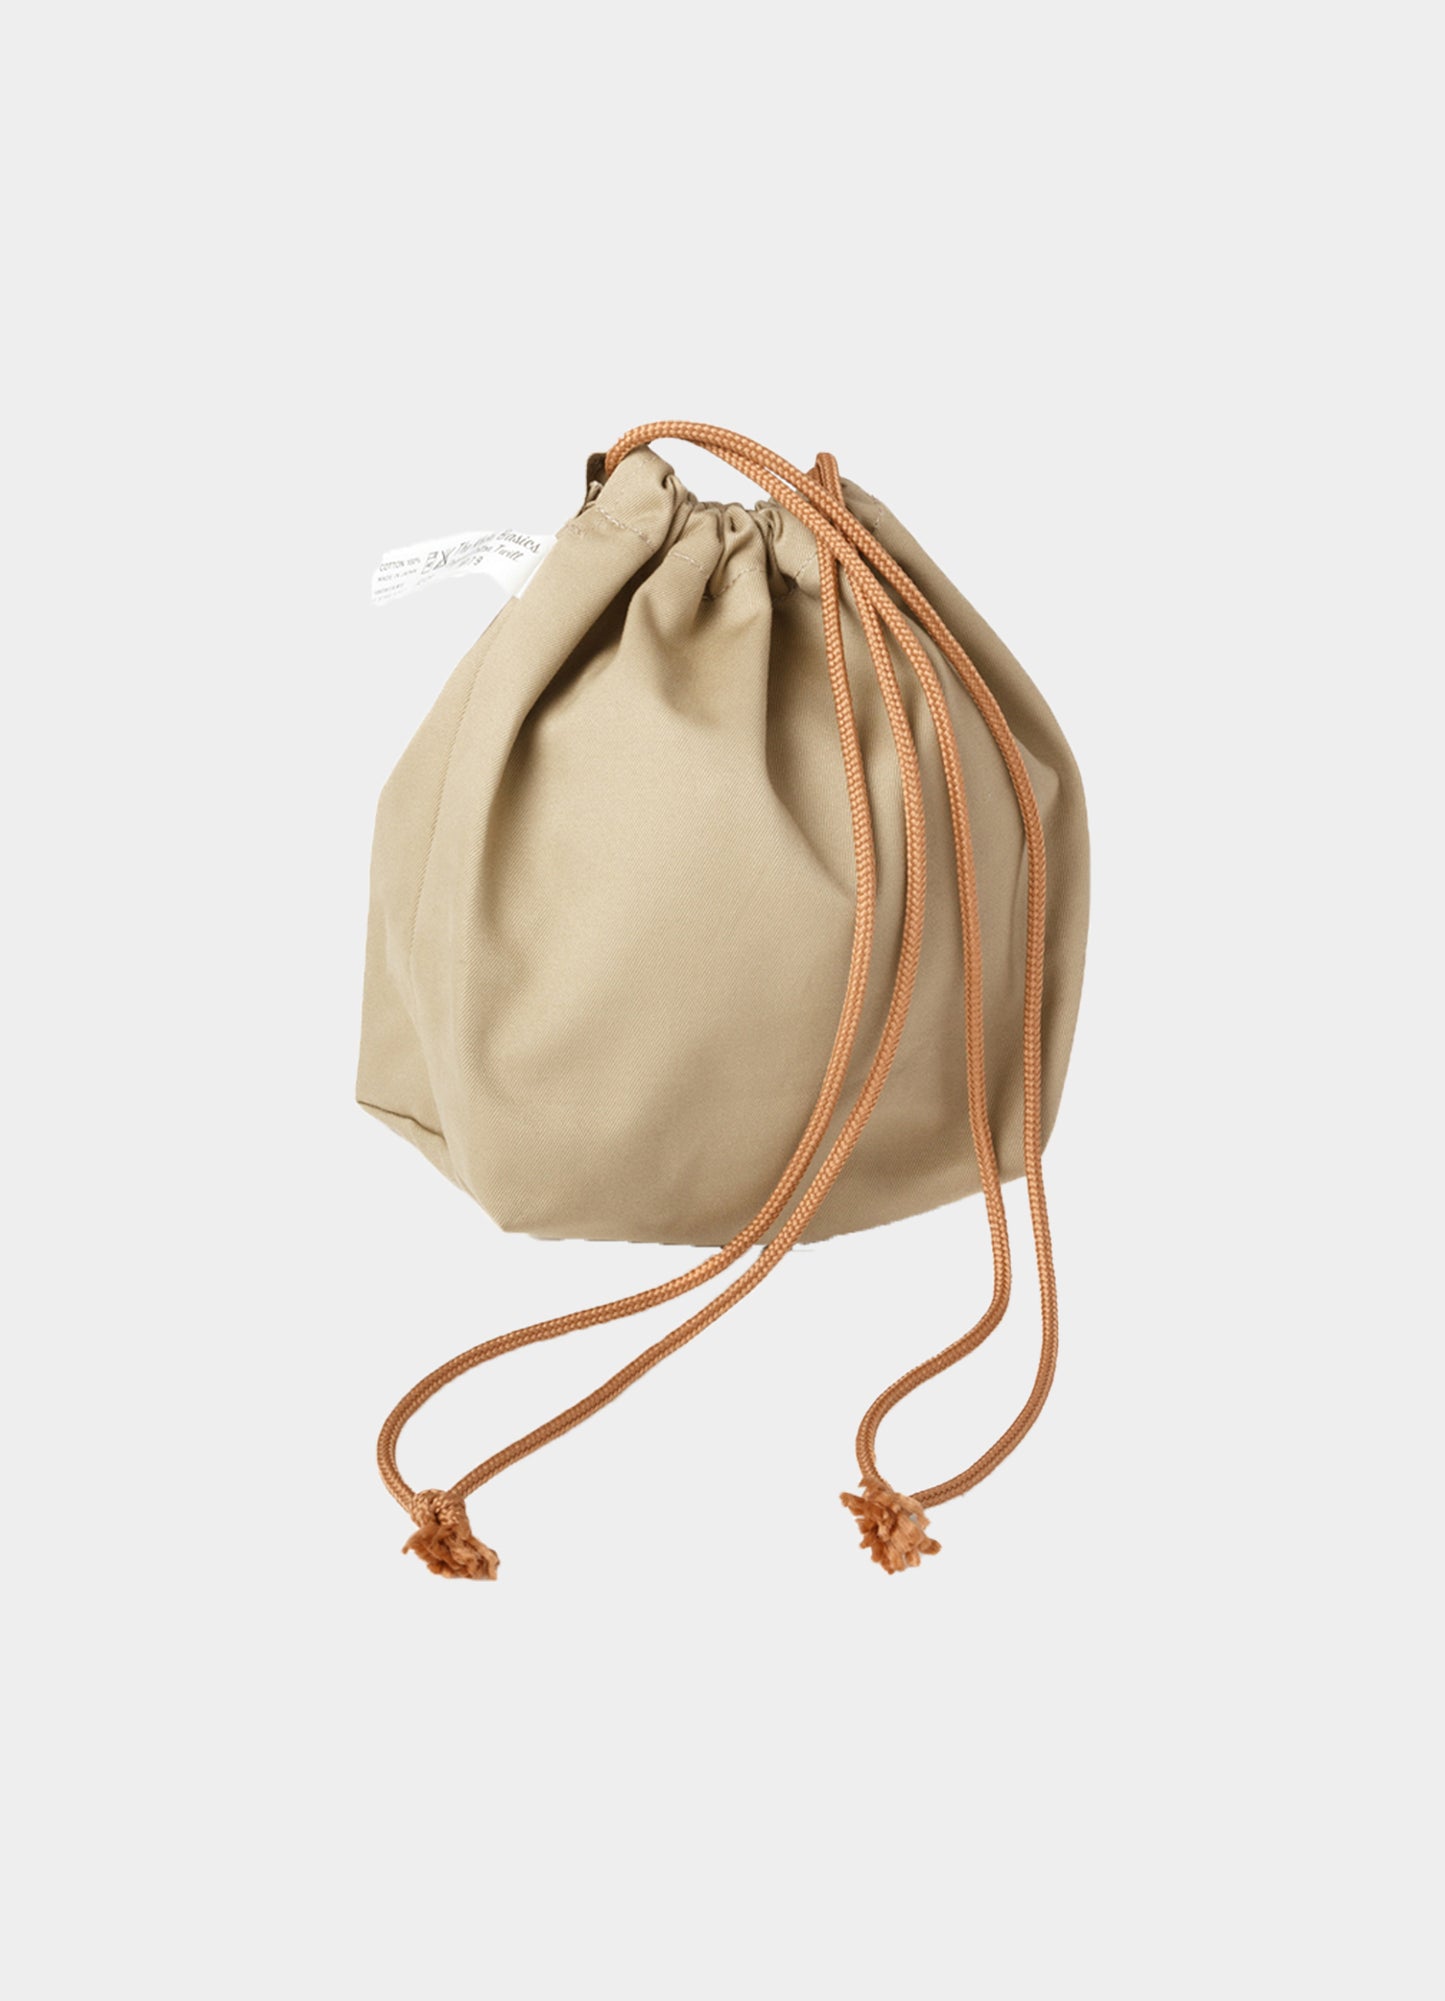 Chino Drawstring Bag [DS-CDB-01]